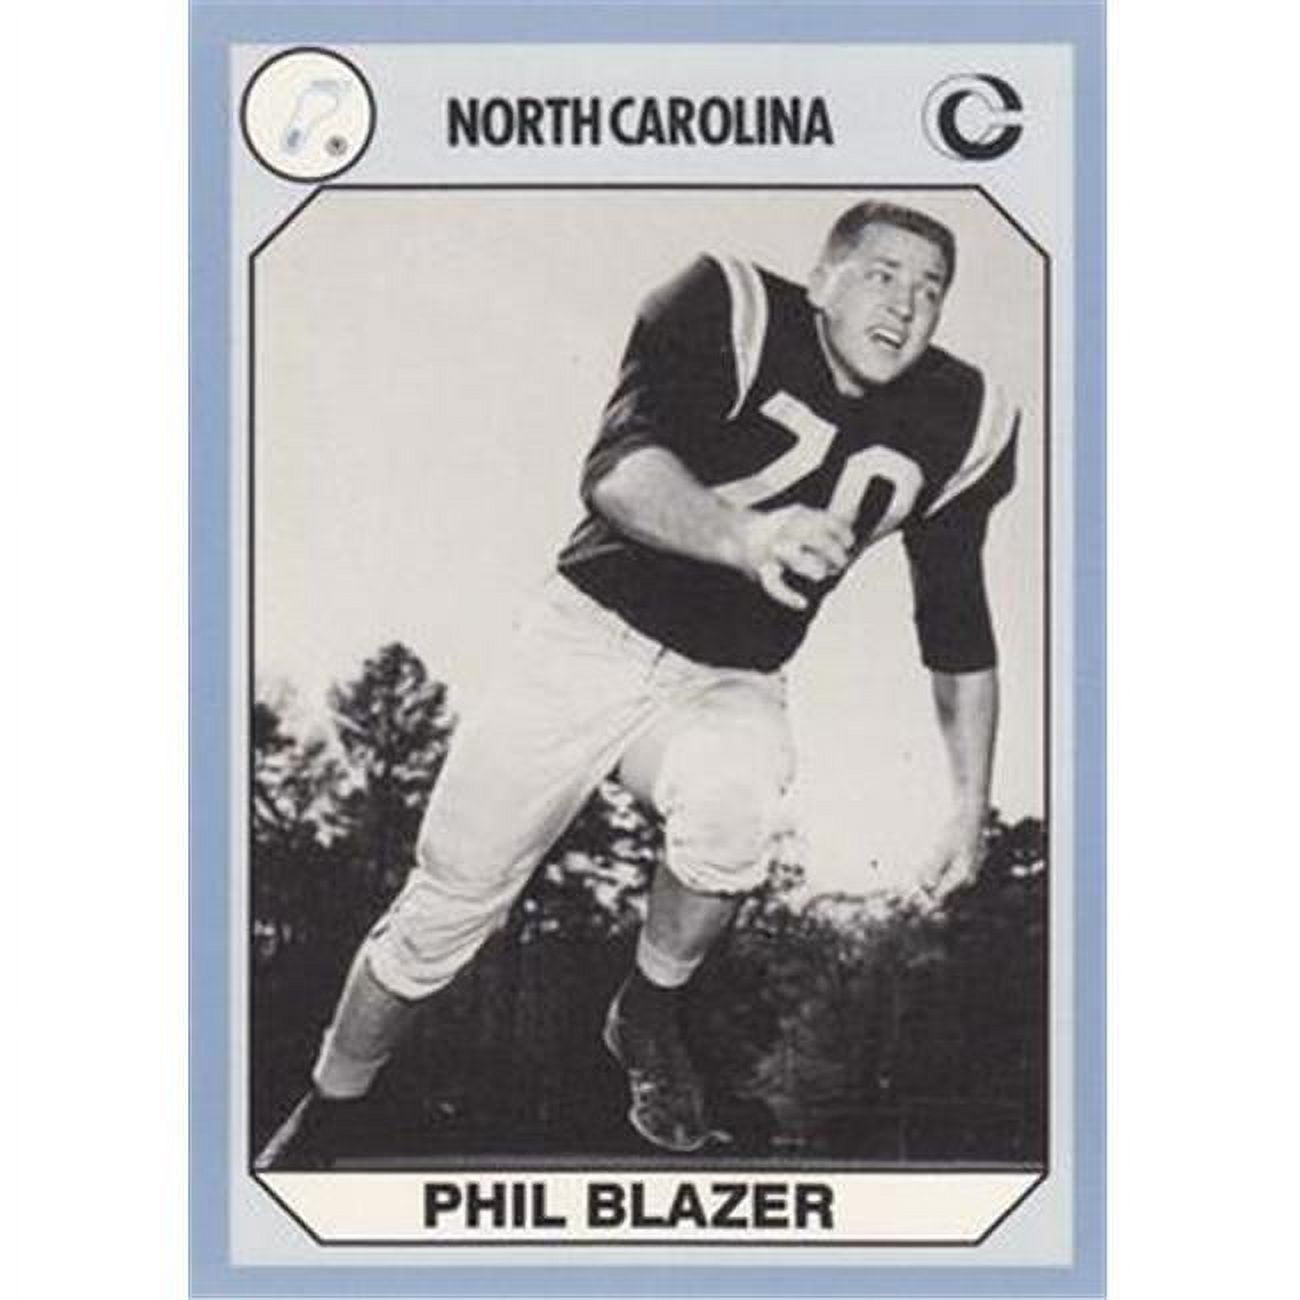 Phil Blazer jersey